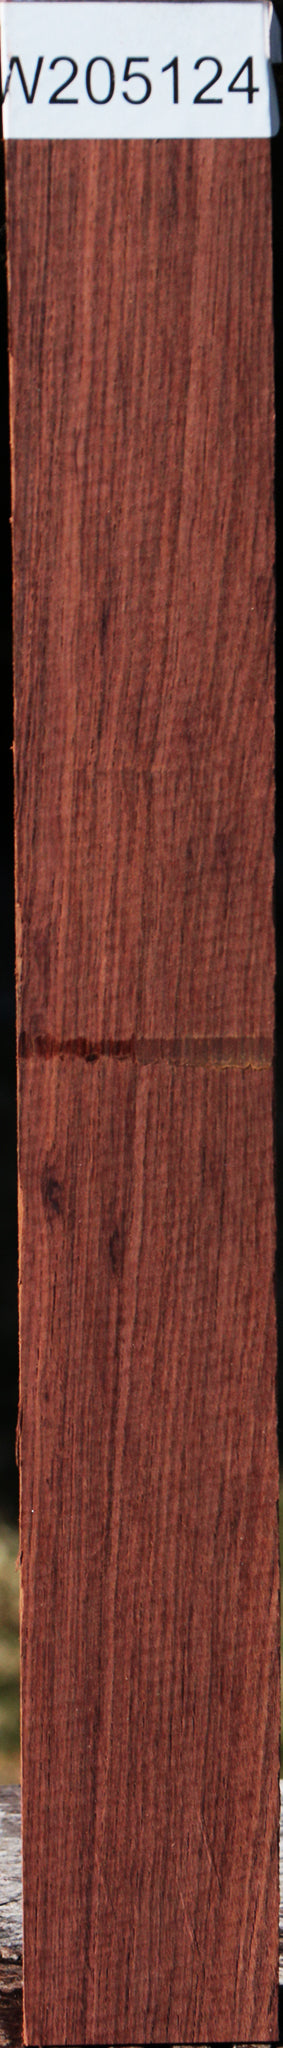 Madagascar Rosewood Micro Lumber